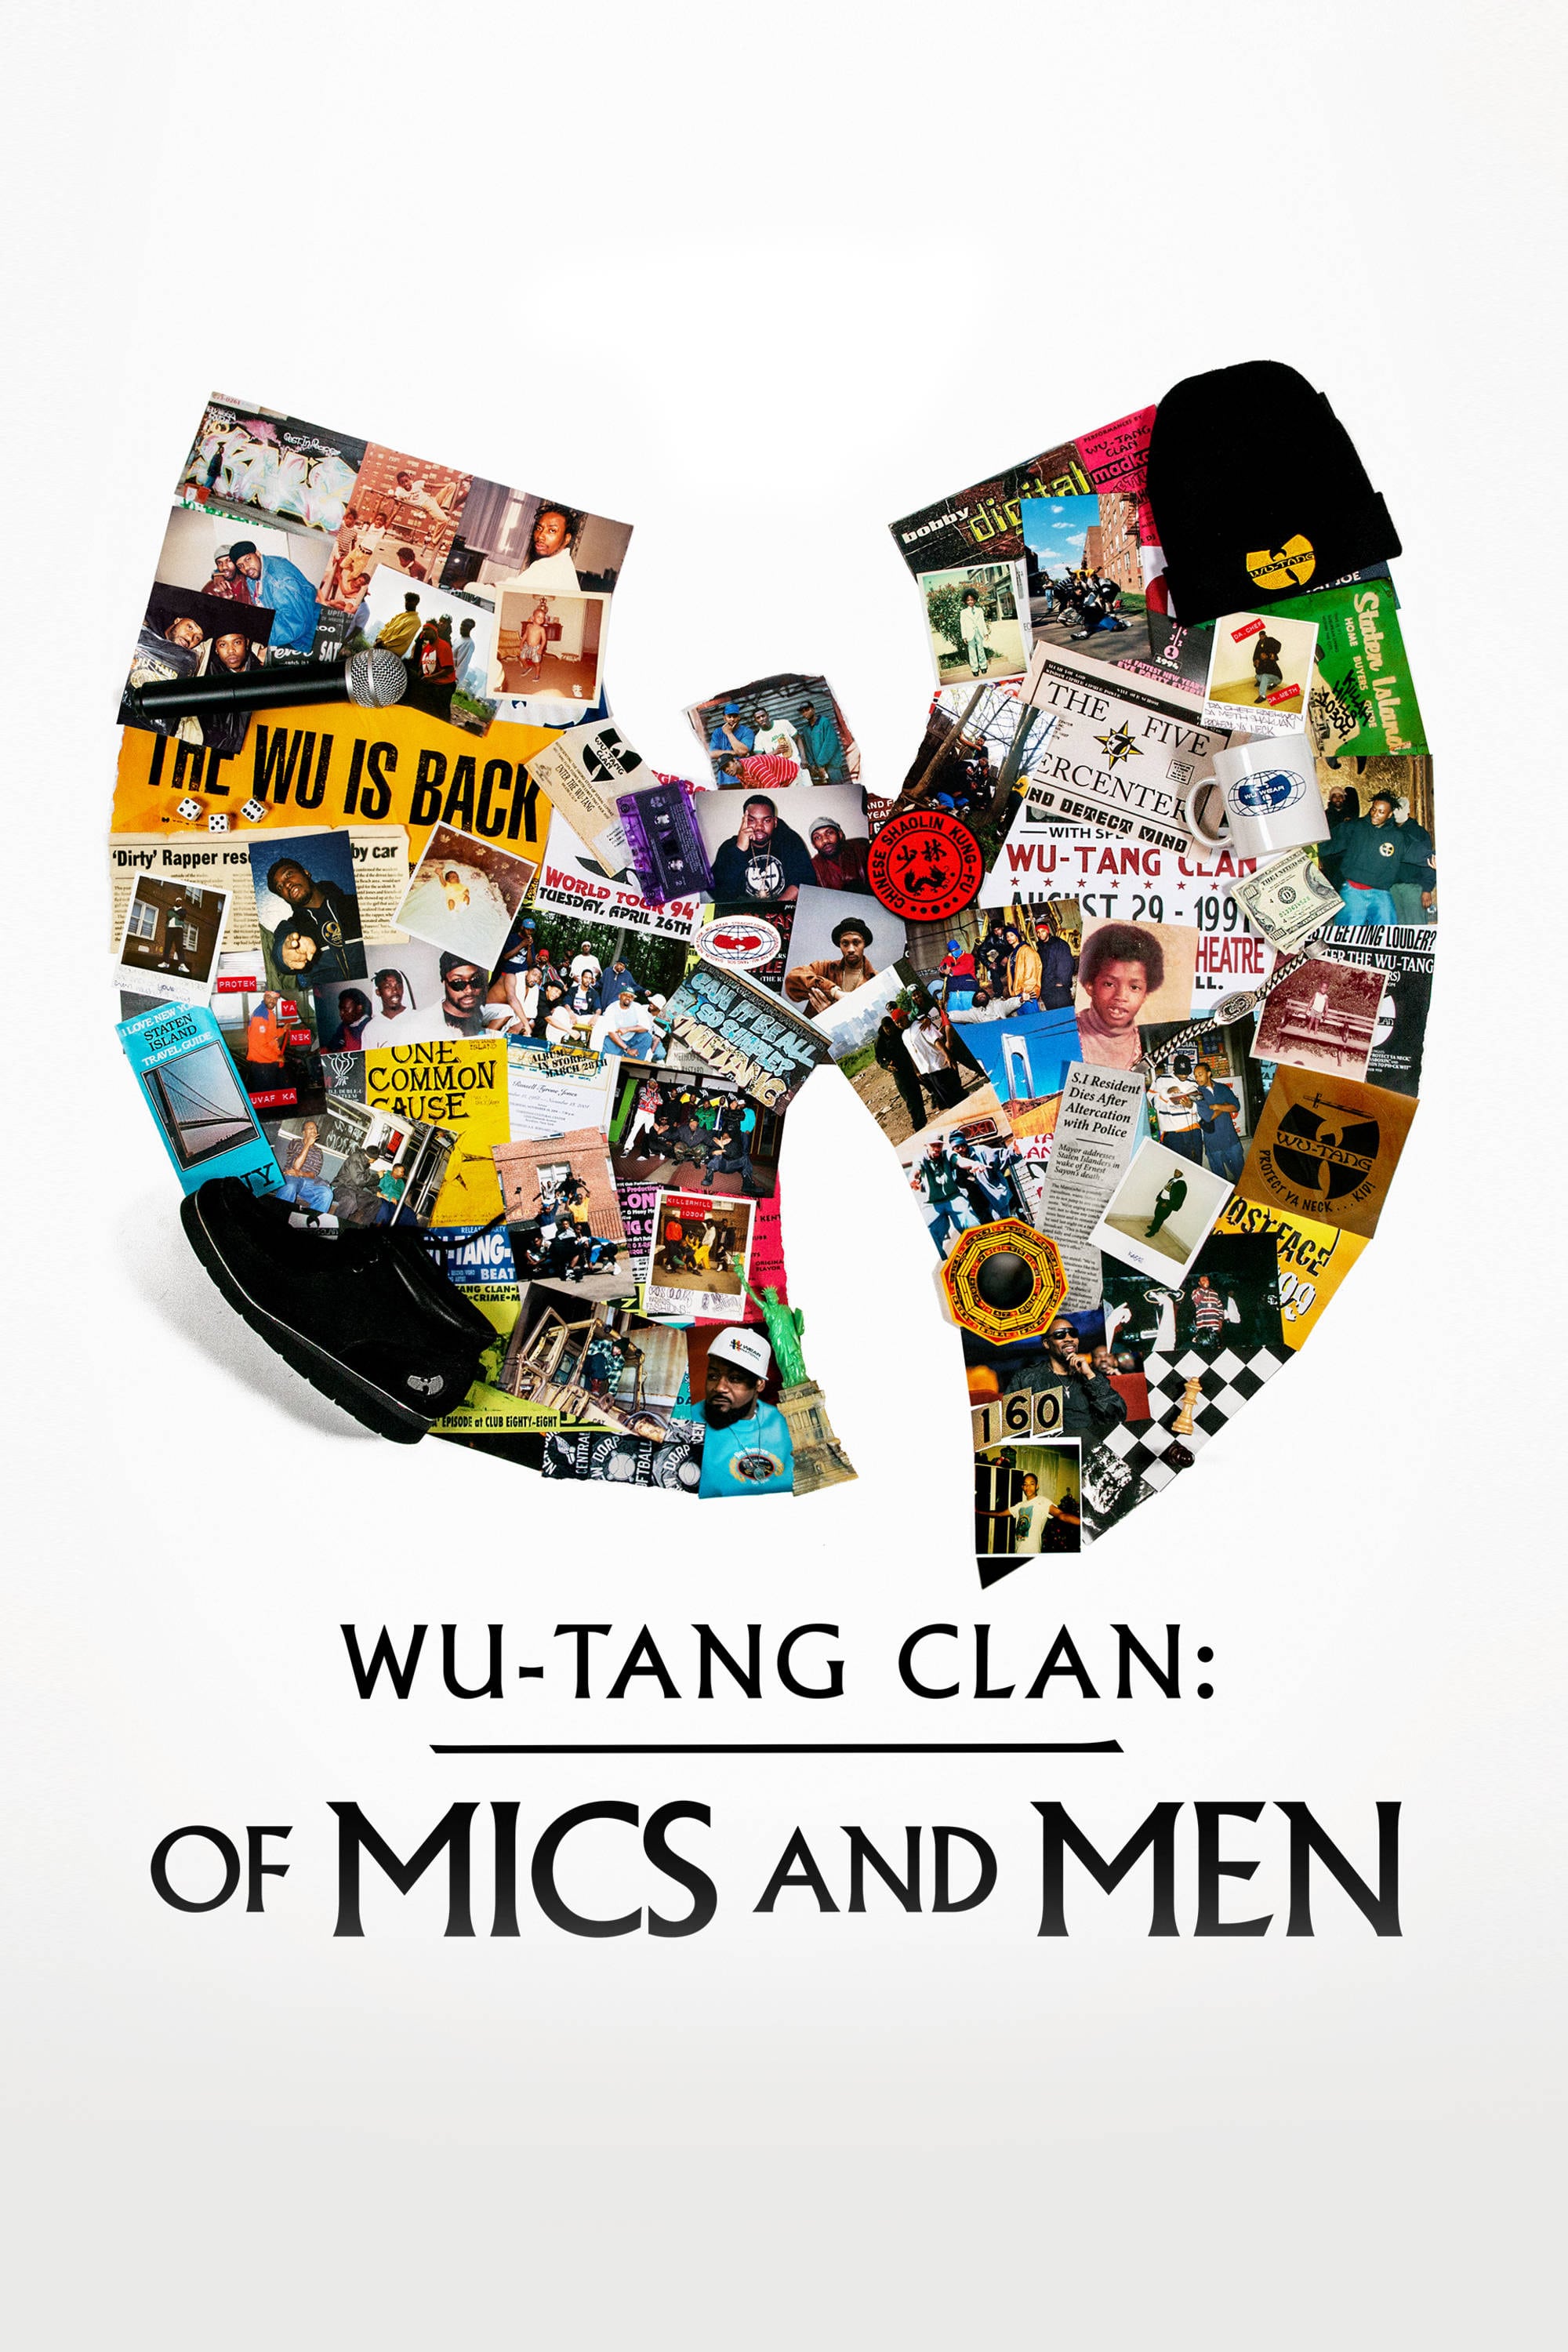 Wu-Tang Clan. Revolucion Hip hop